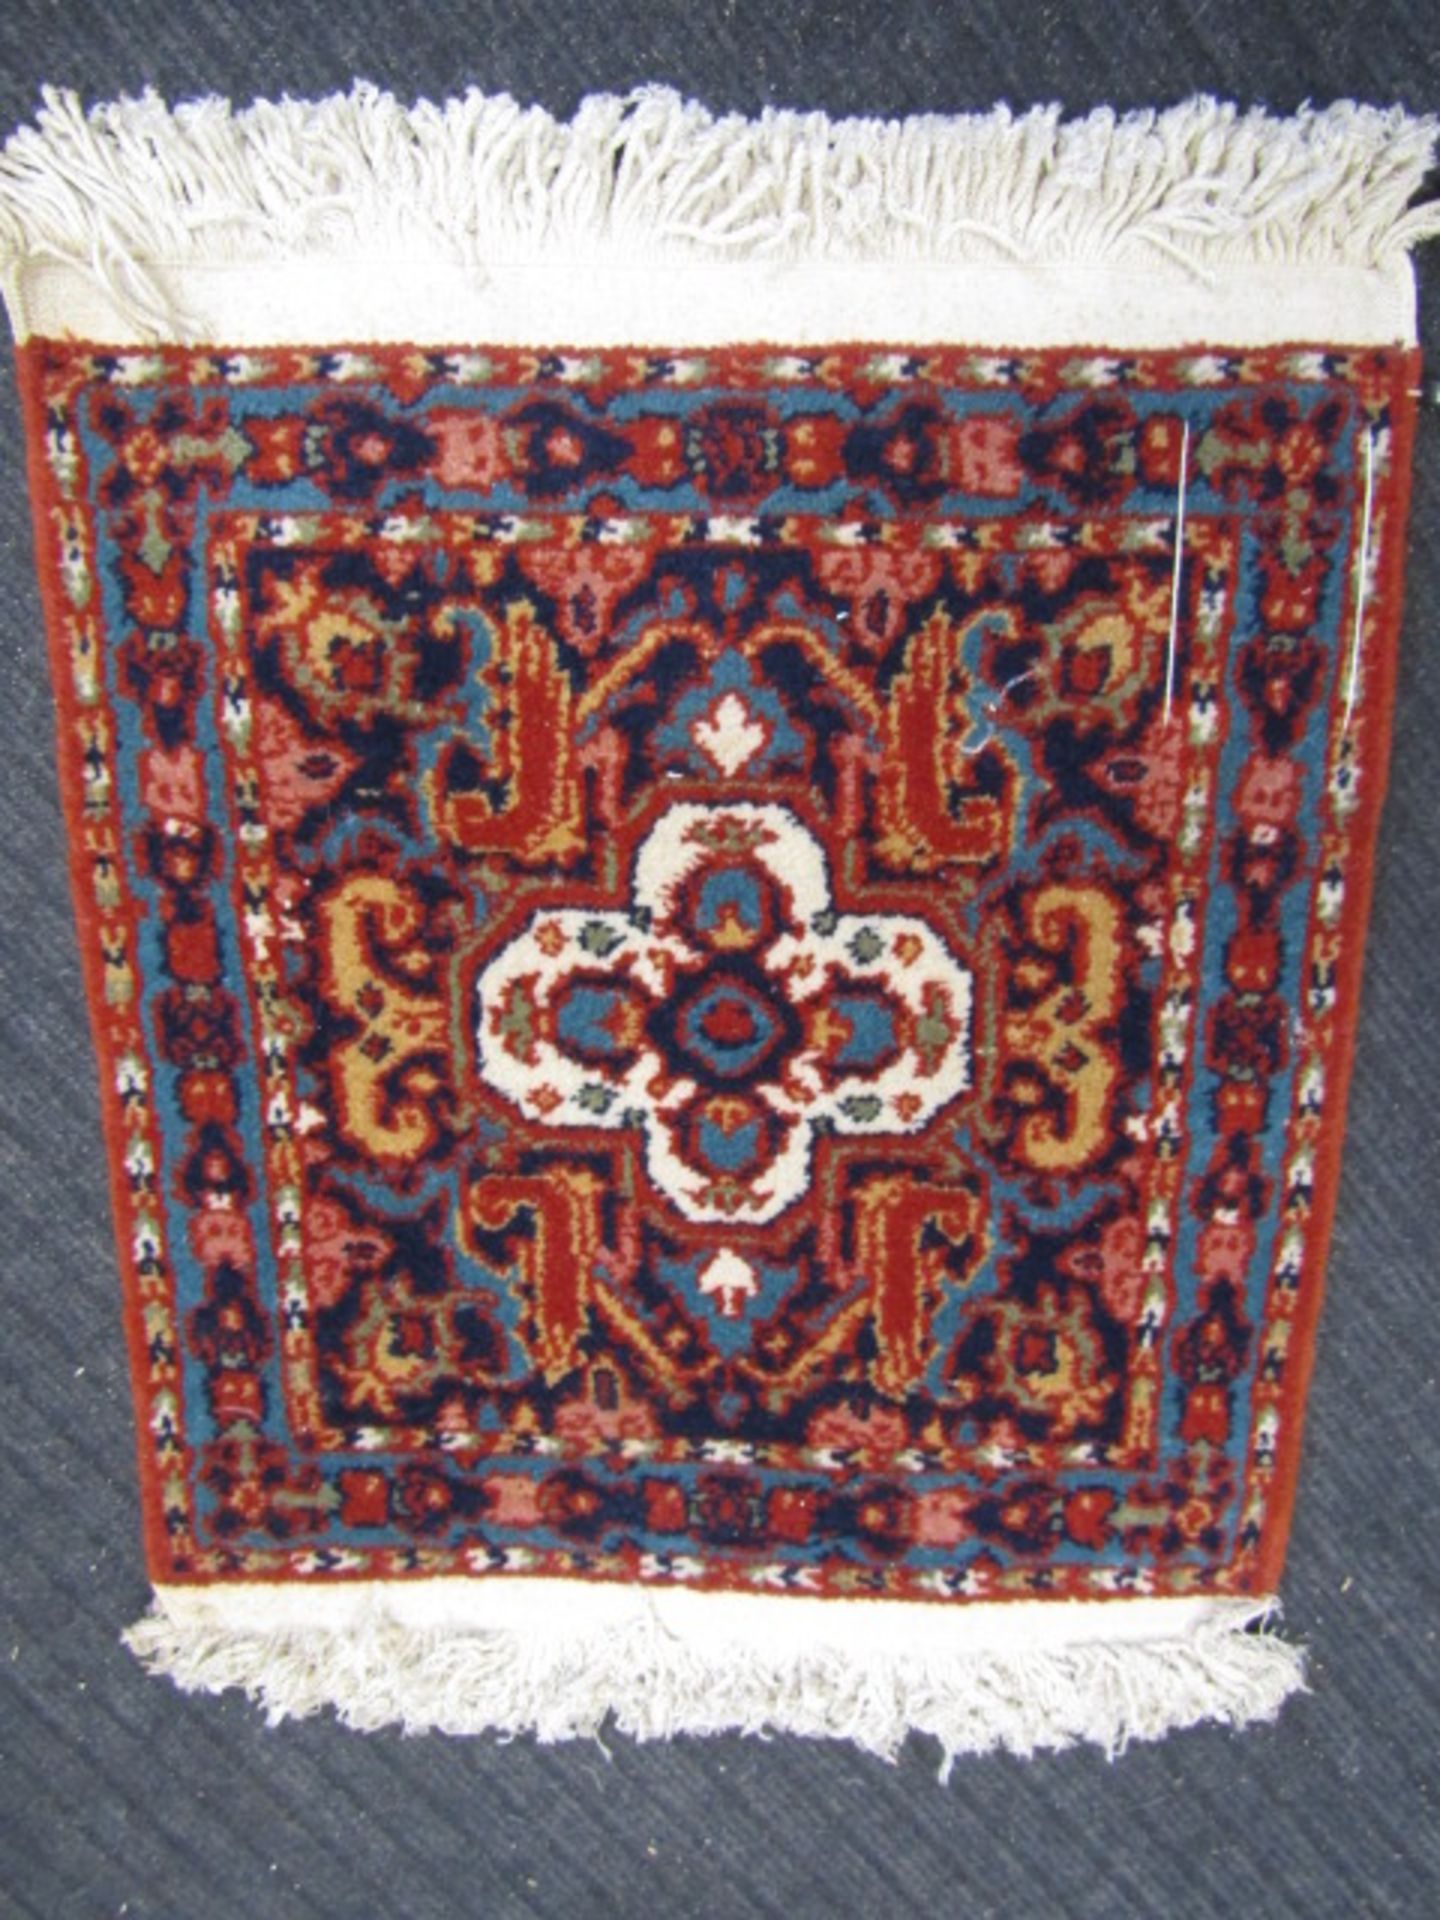 7 square wool Armenian carpet mats 44x42cm (excluding fringe) - Image 11 of 18